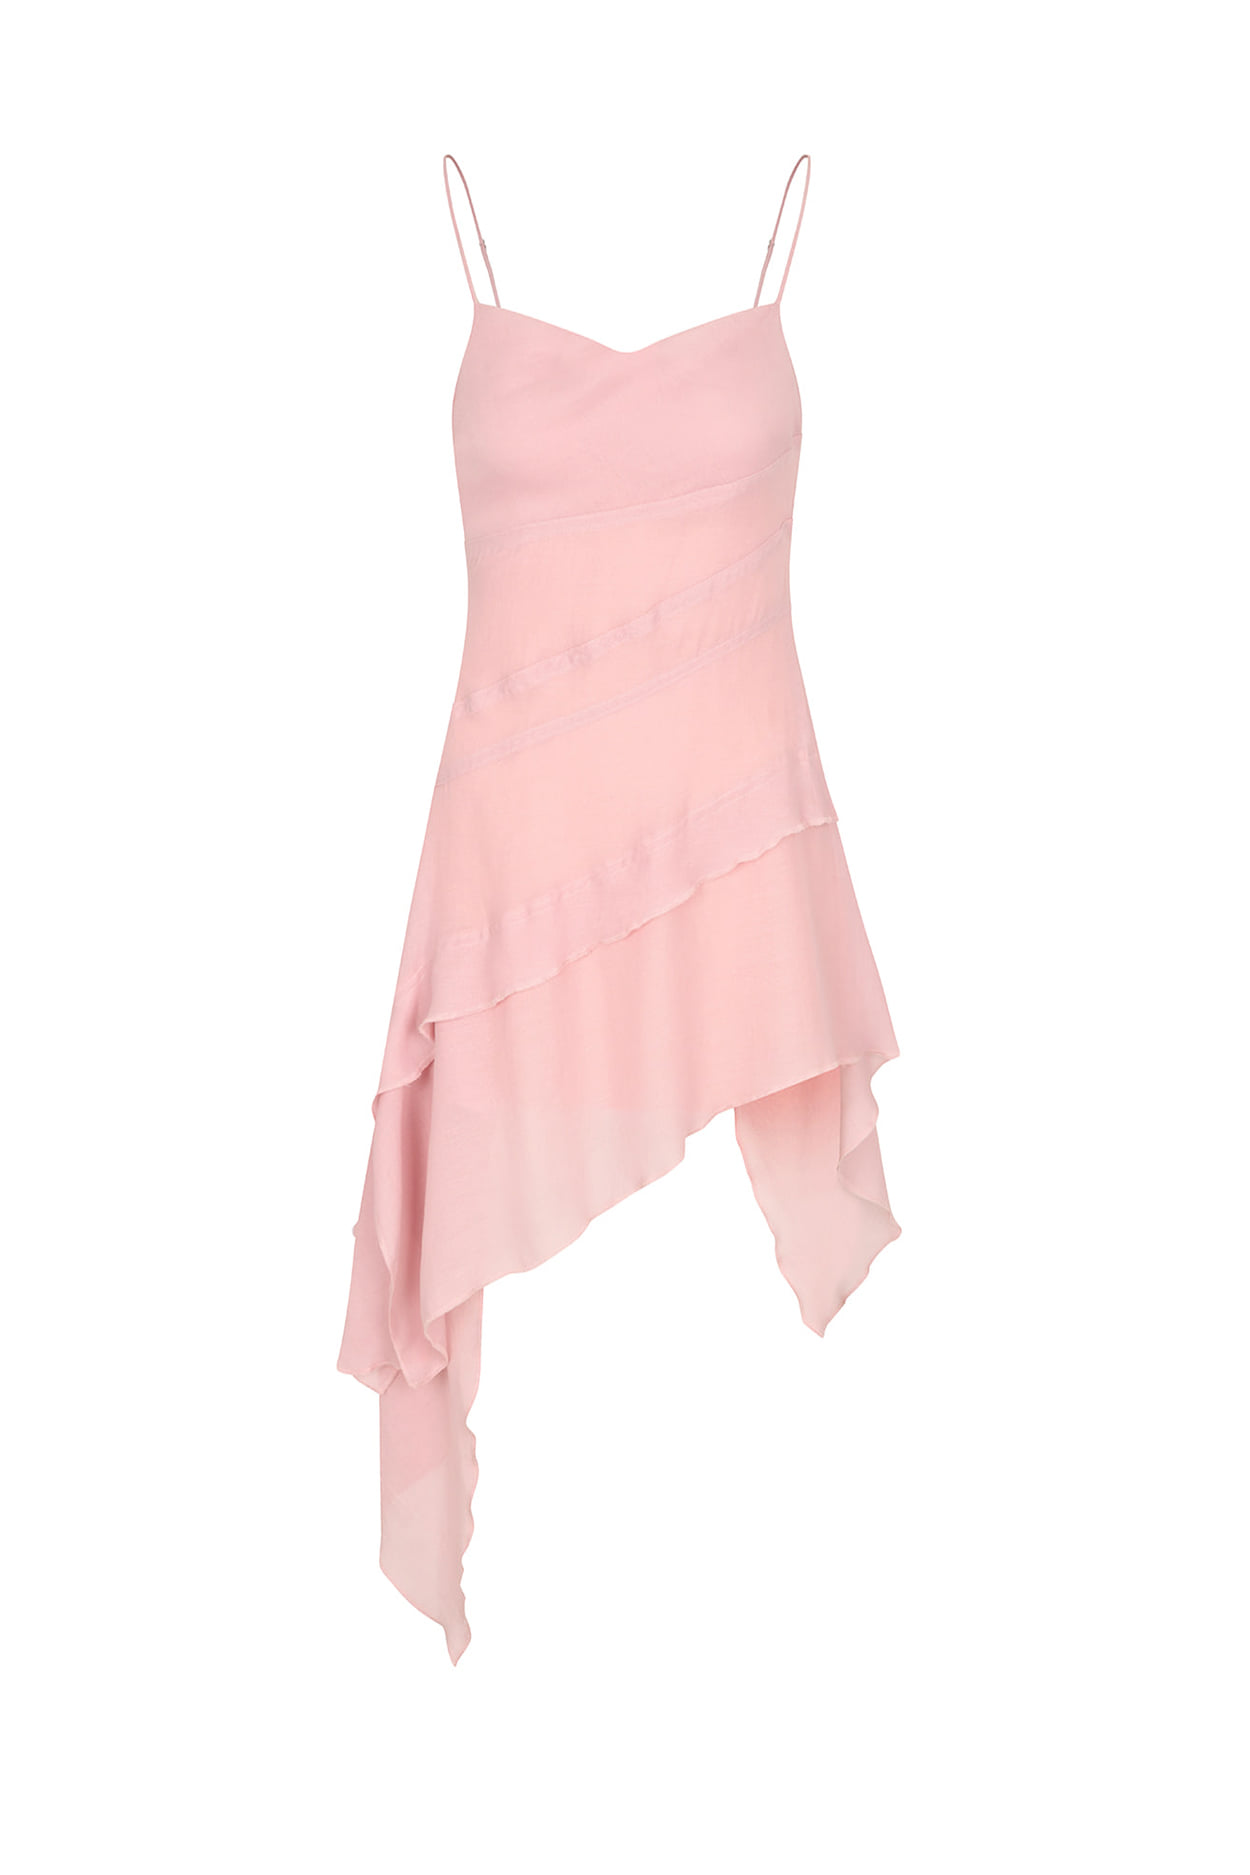 FAIRY DRESS pink